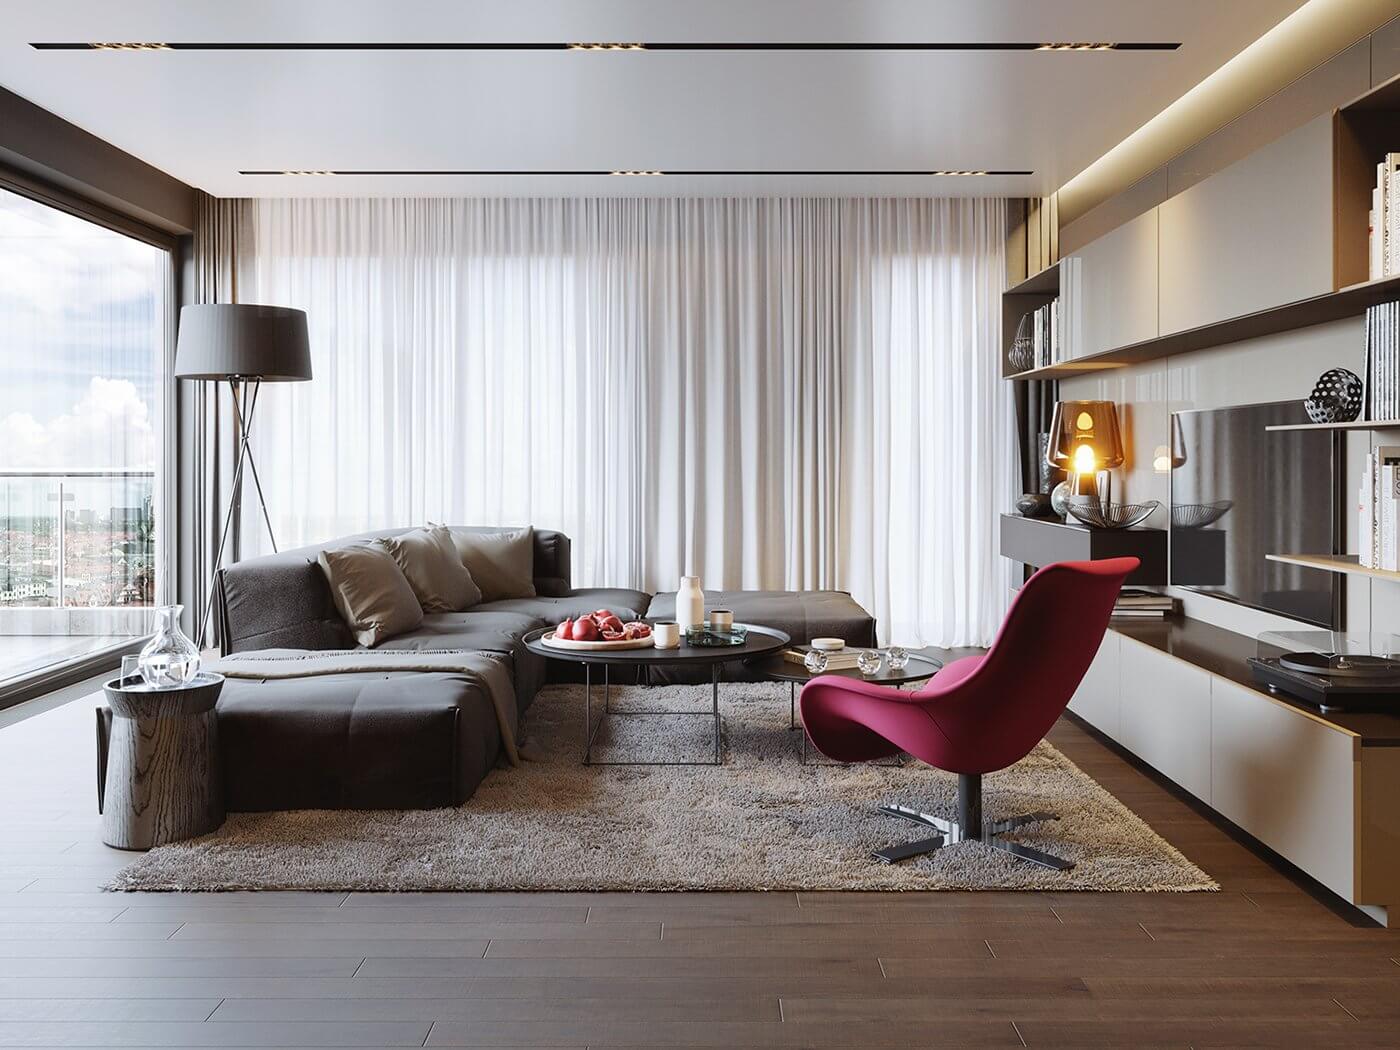 Apartment in munich living room lounge - cgi visualization